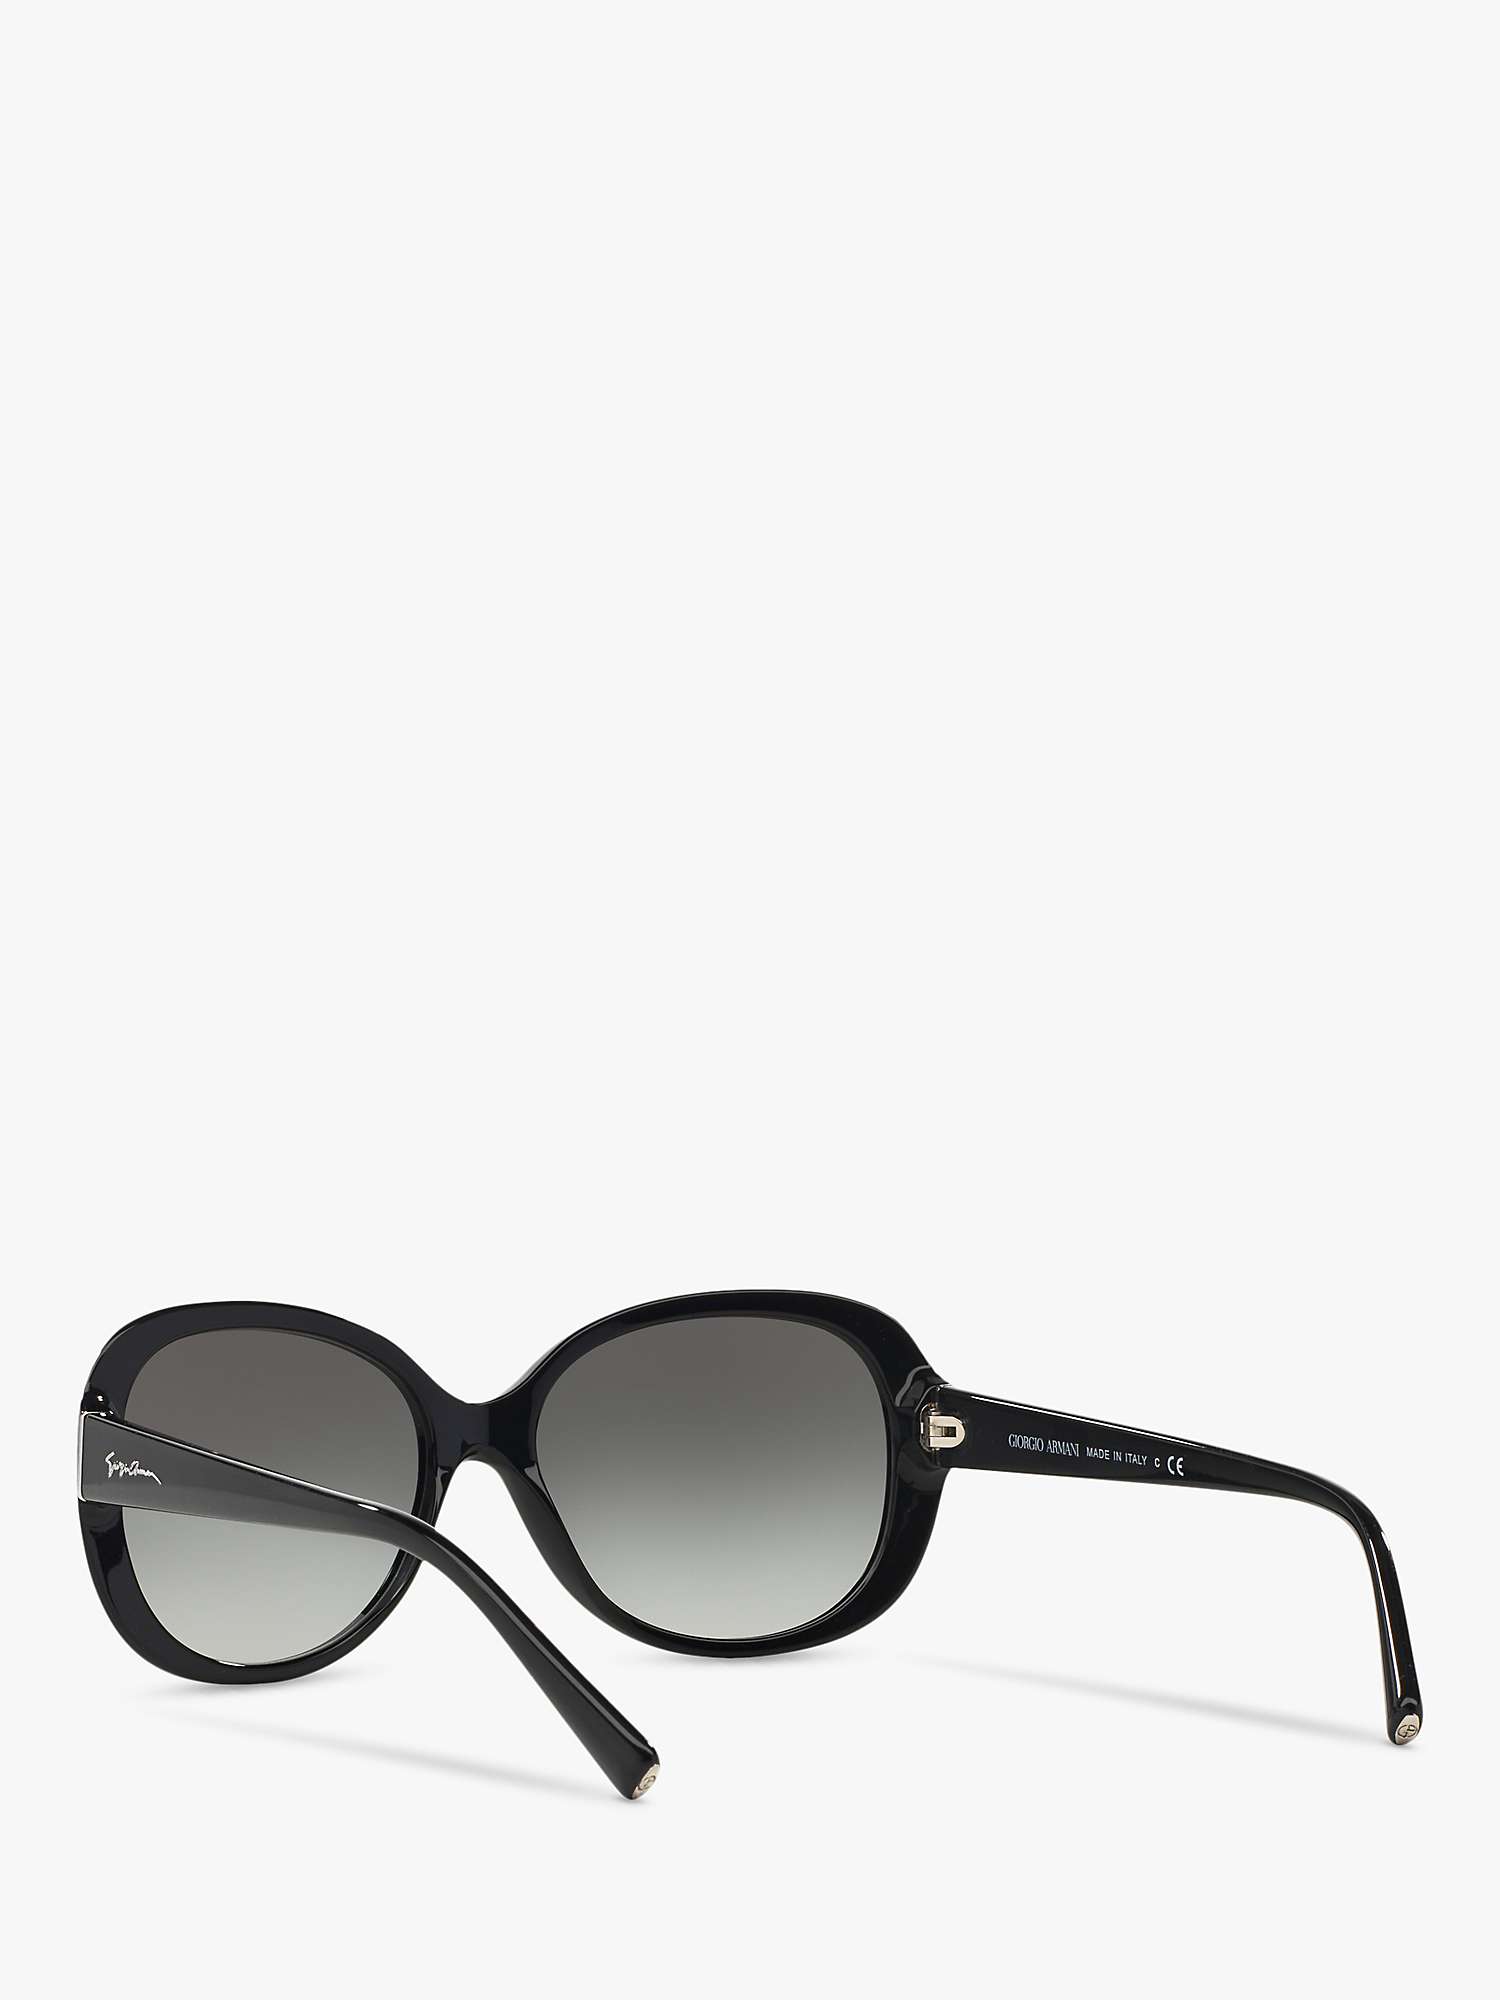 Buy Giorgio Armani AR8047 Women's Round Sunglasses Online at johnlewis.com